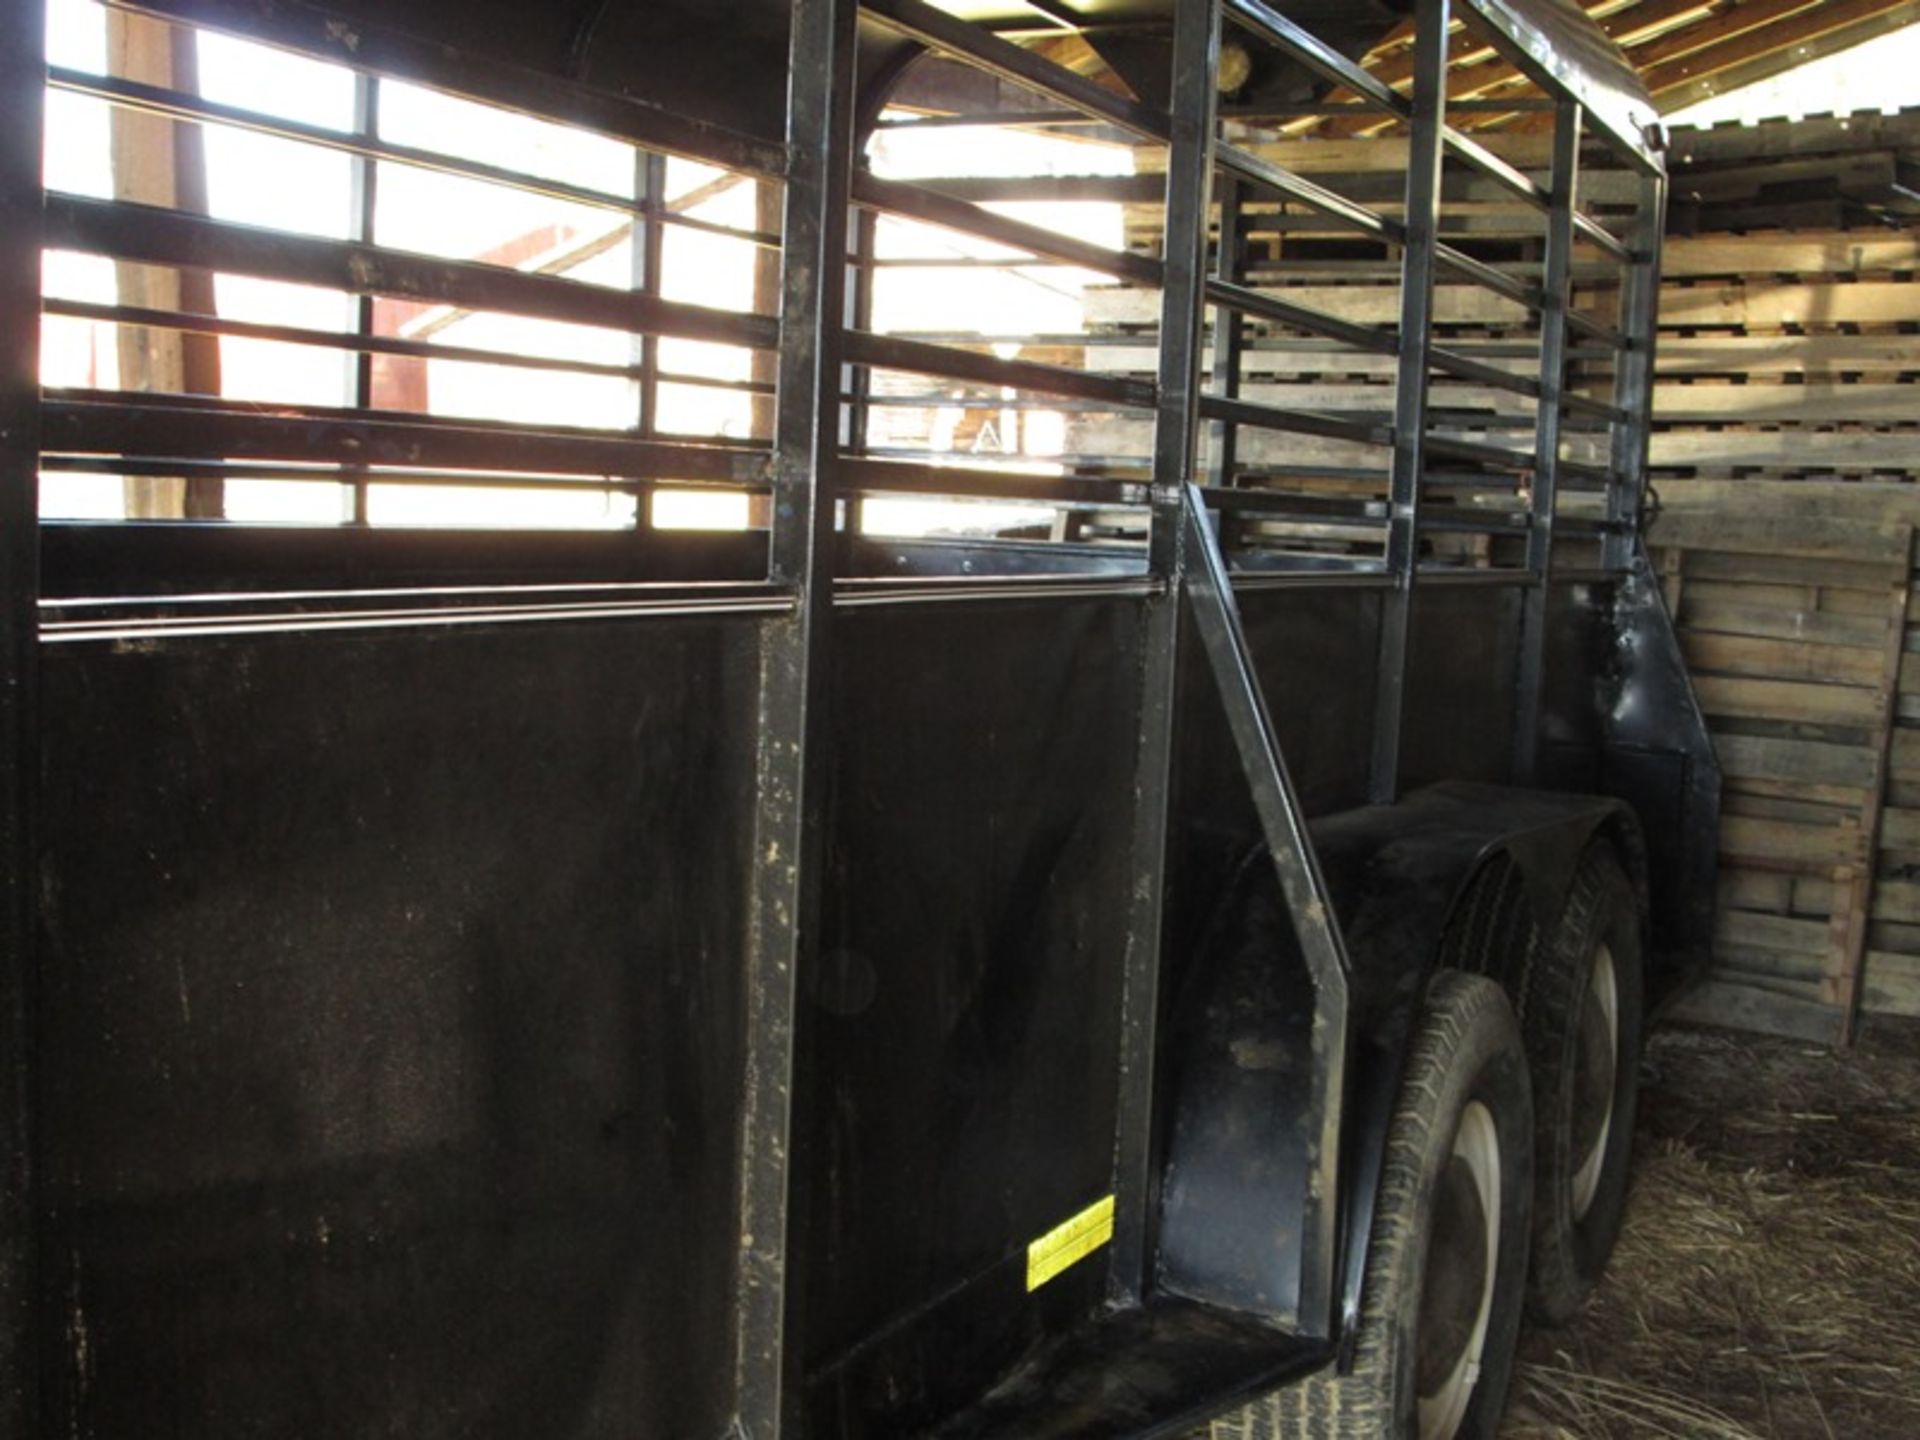 1988 Trai 20' steel livestock trailer vin# NCX701068 - Image 4 of 8